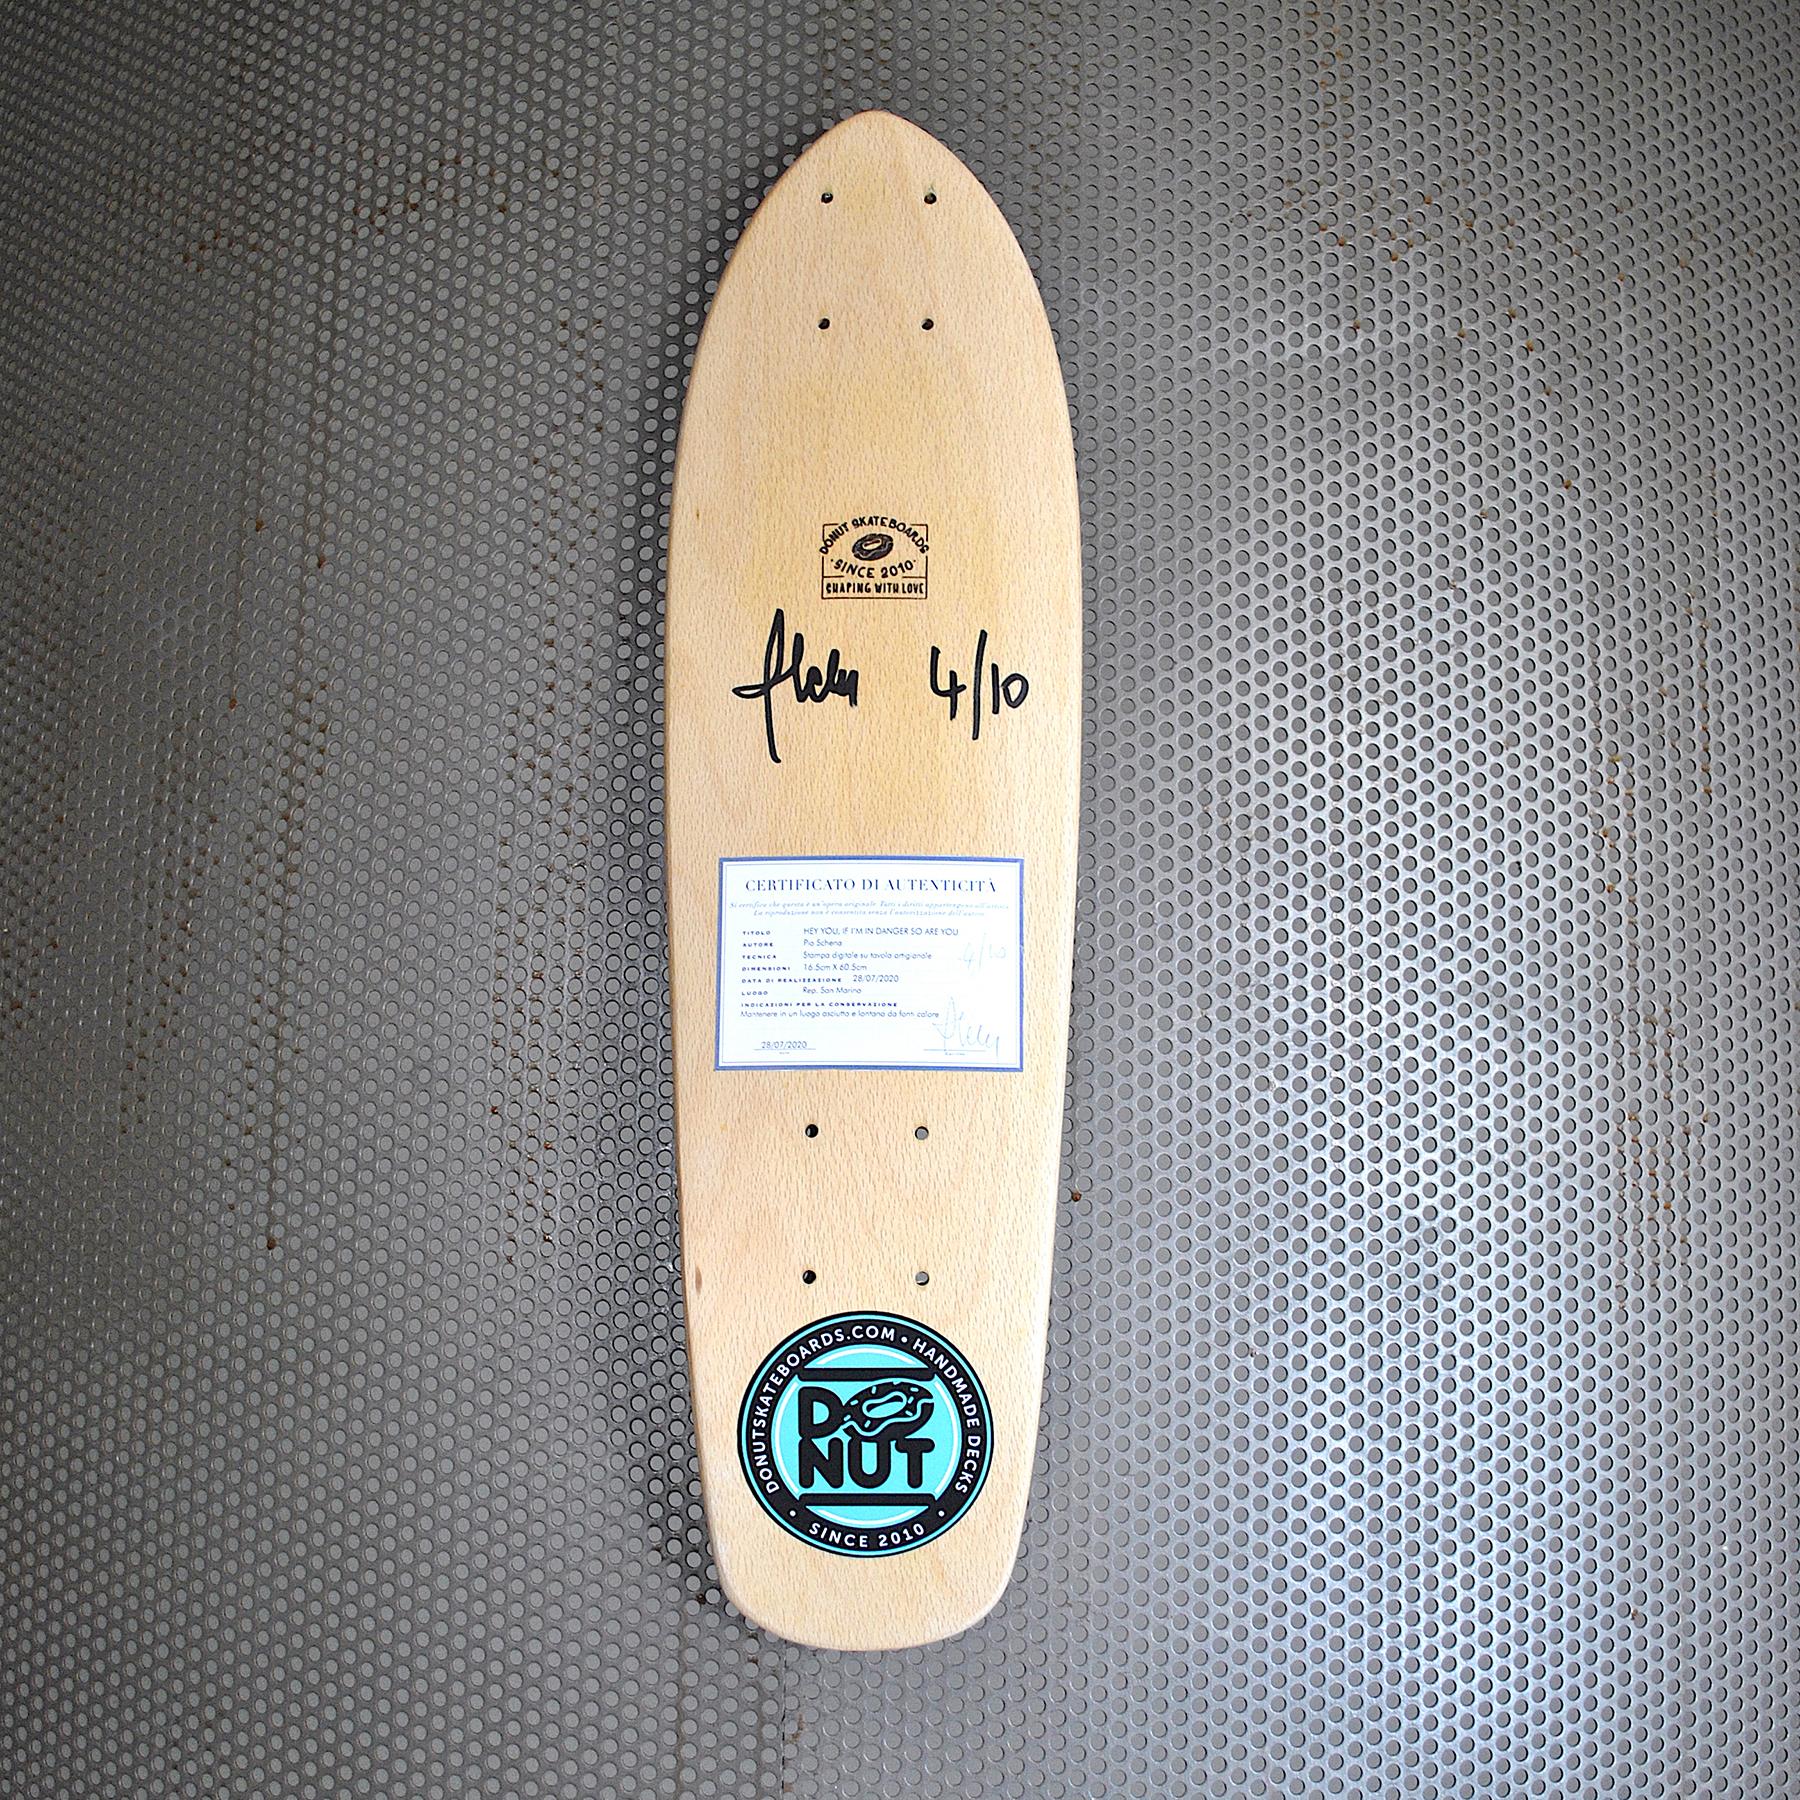 Contemporary Skate Deck Handmade Limited Edition by Pio Schena